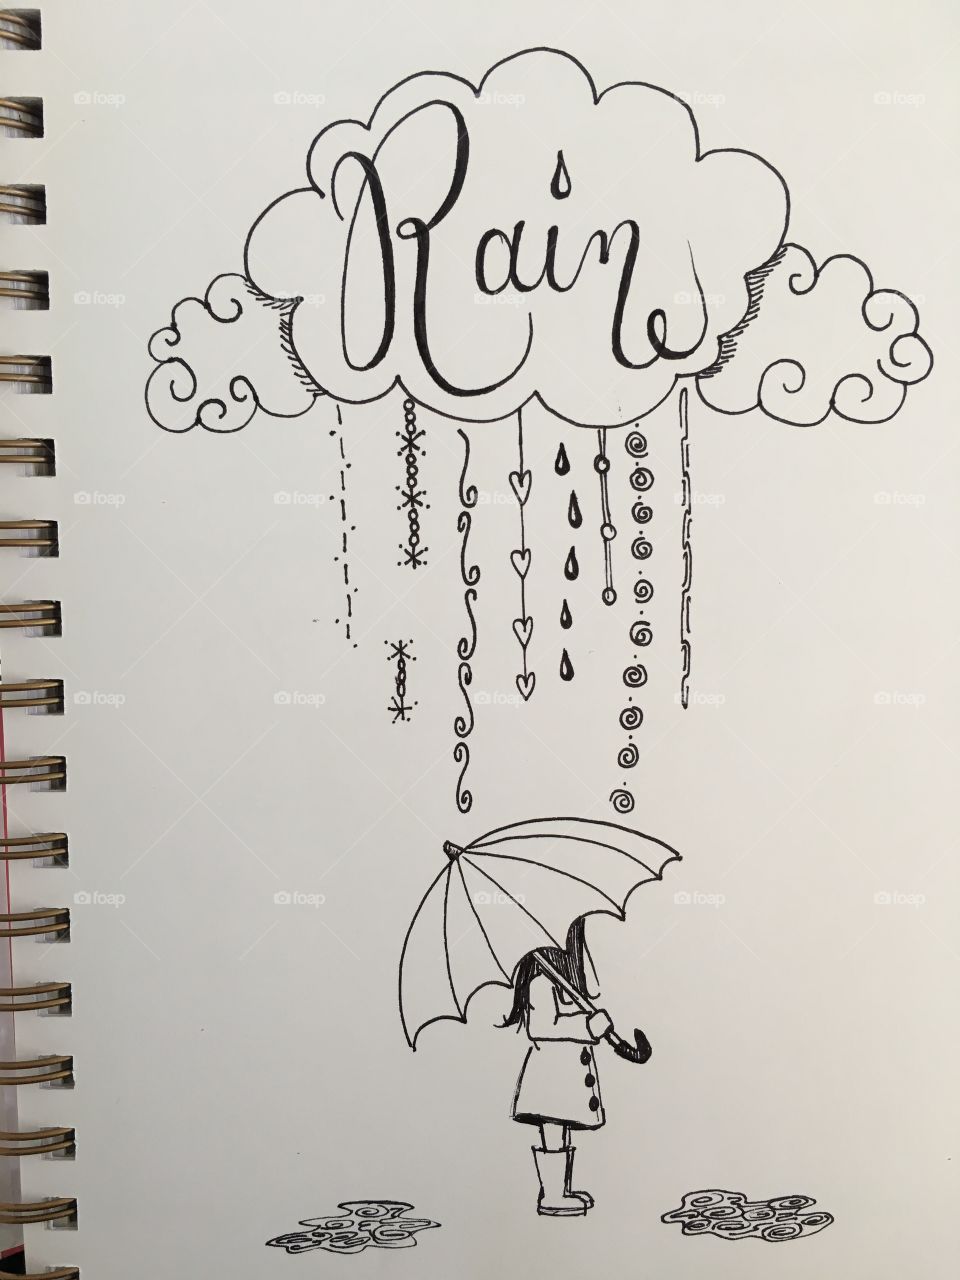 Doodle in the rain